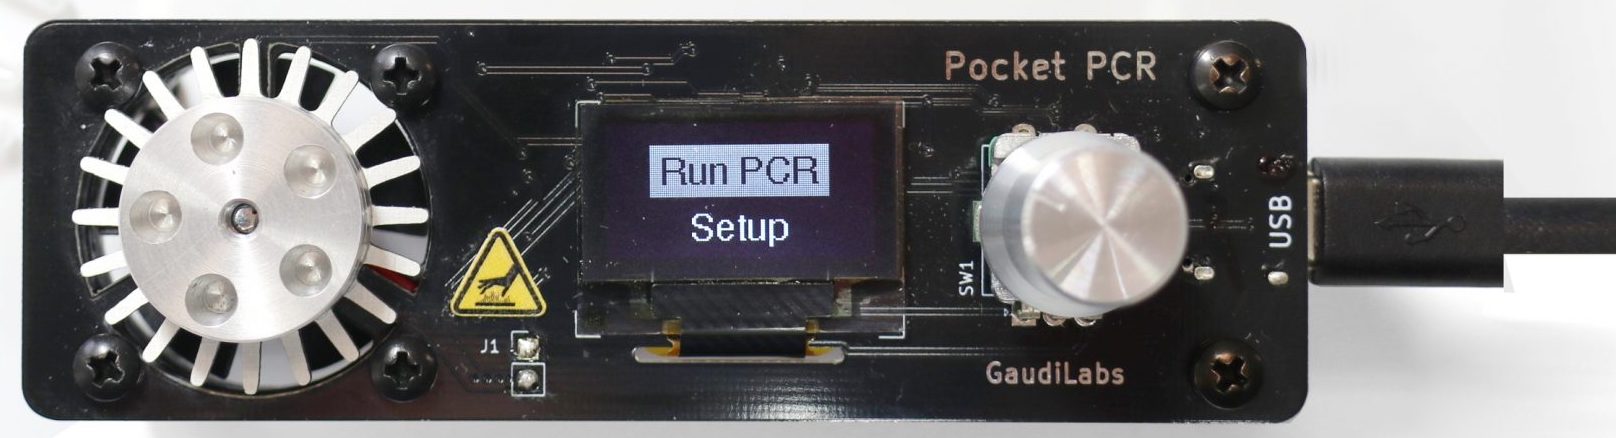 real Pocket-PCR machine